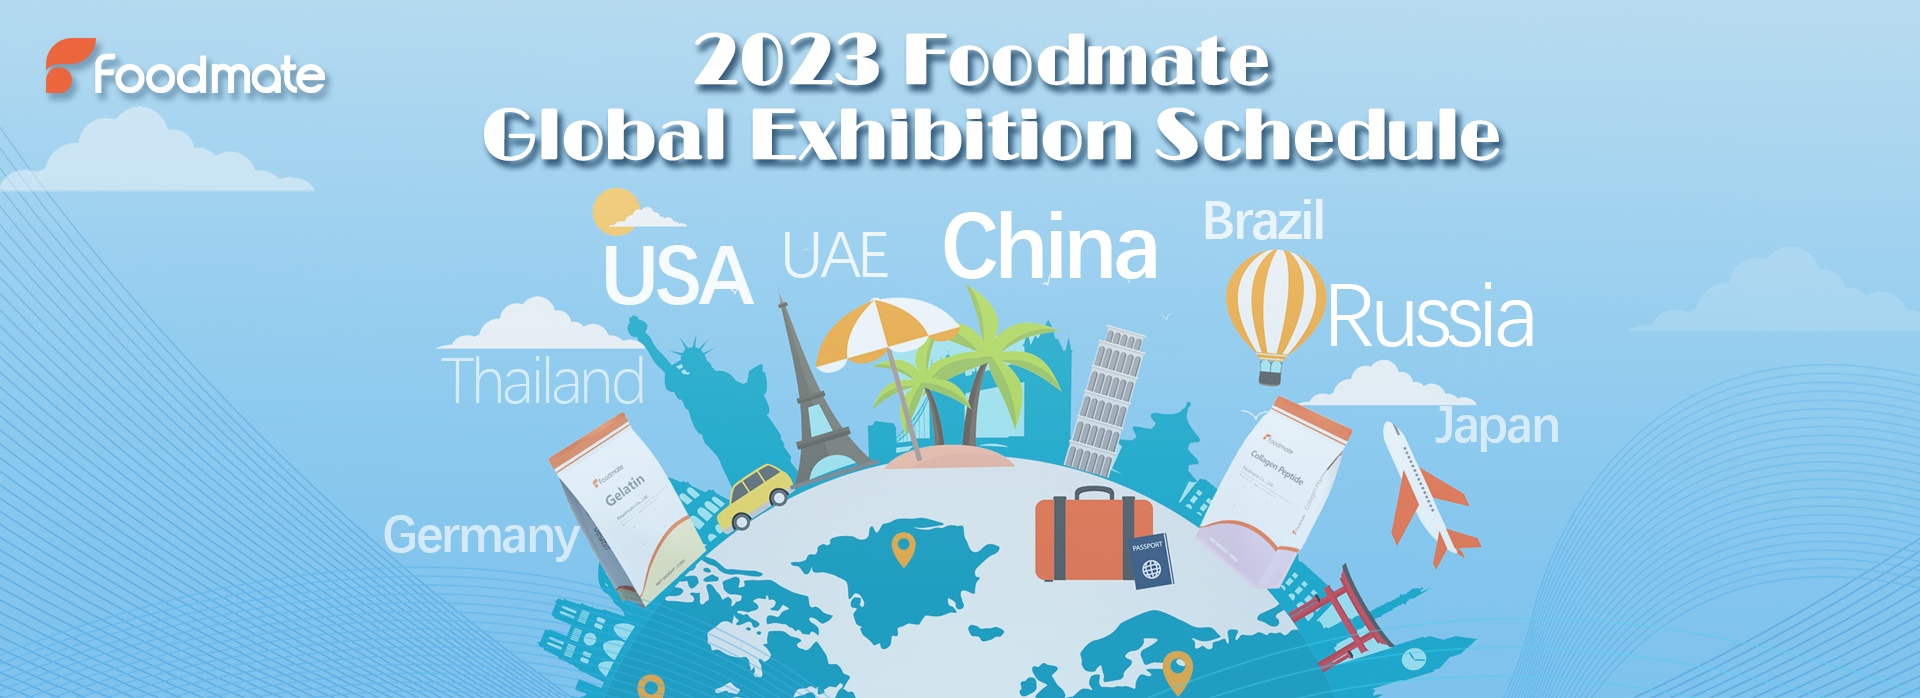 Foodmate Exhibition